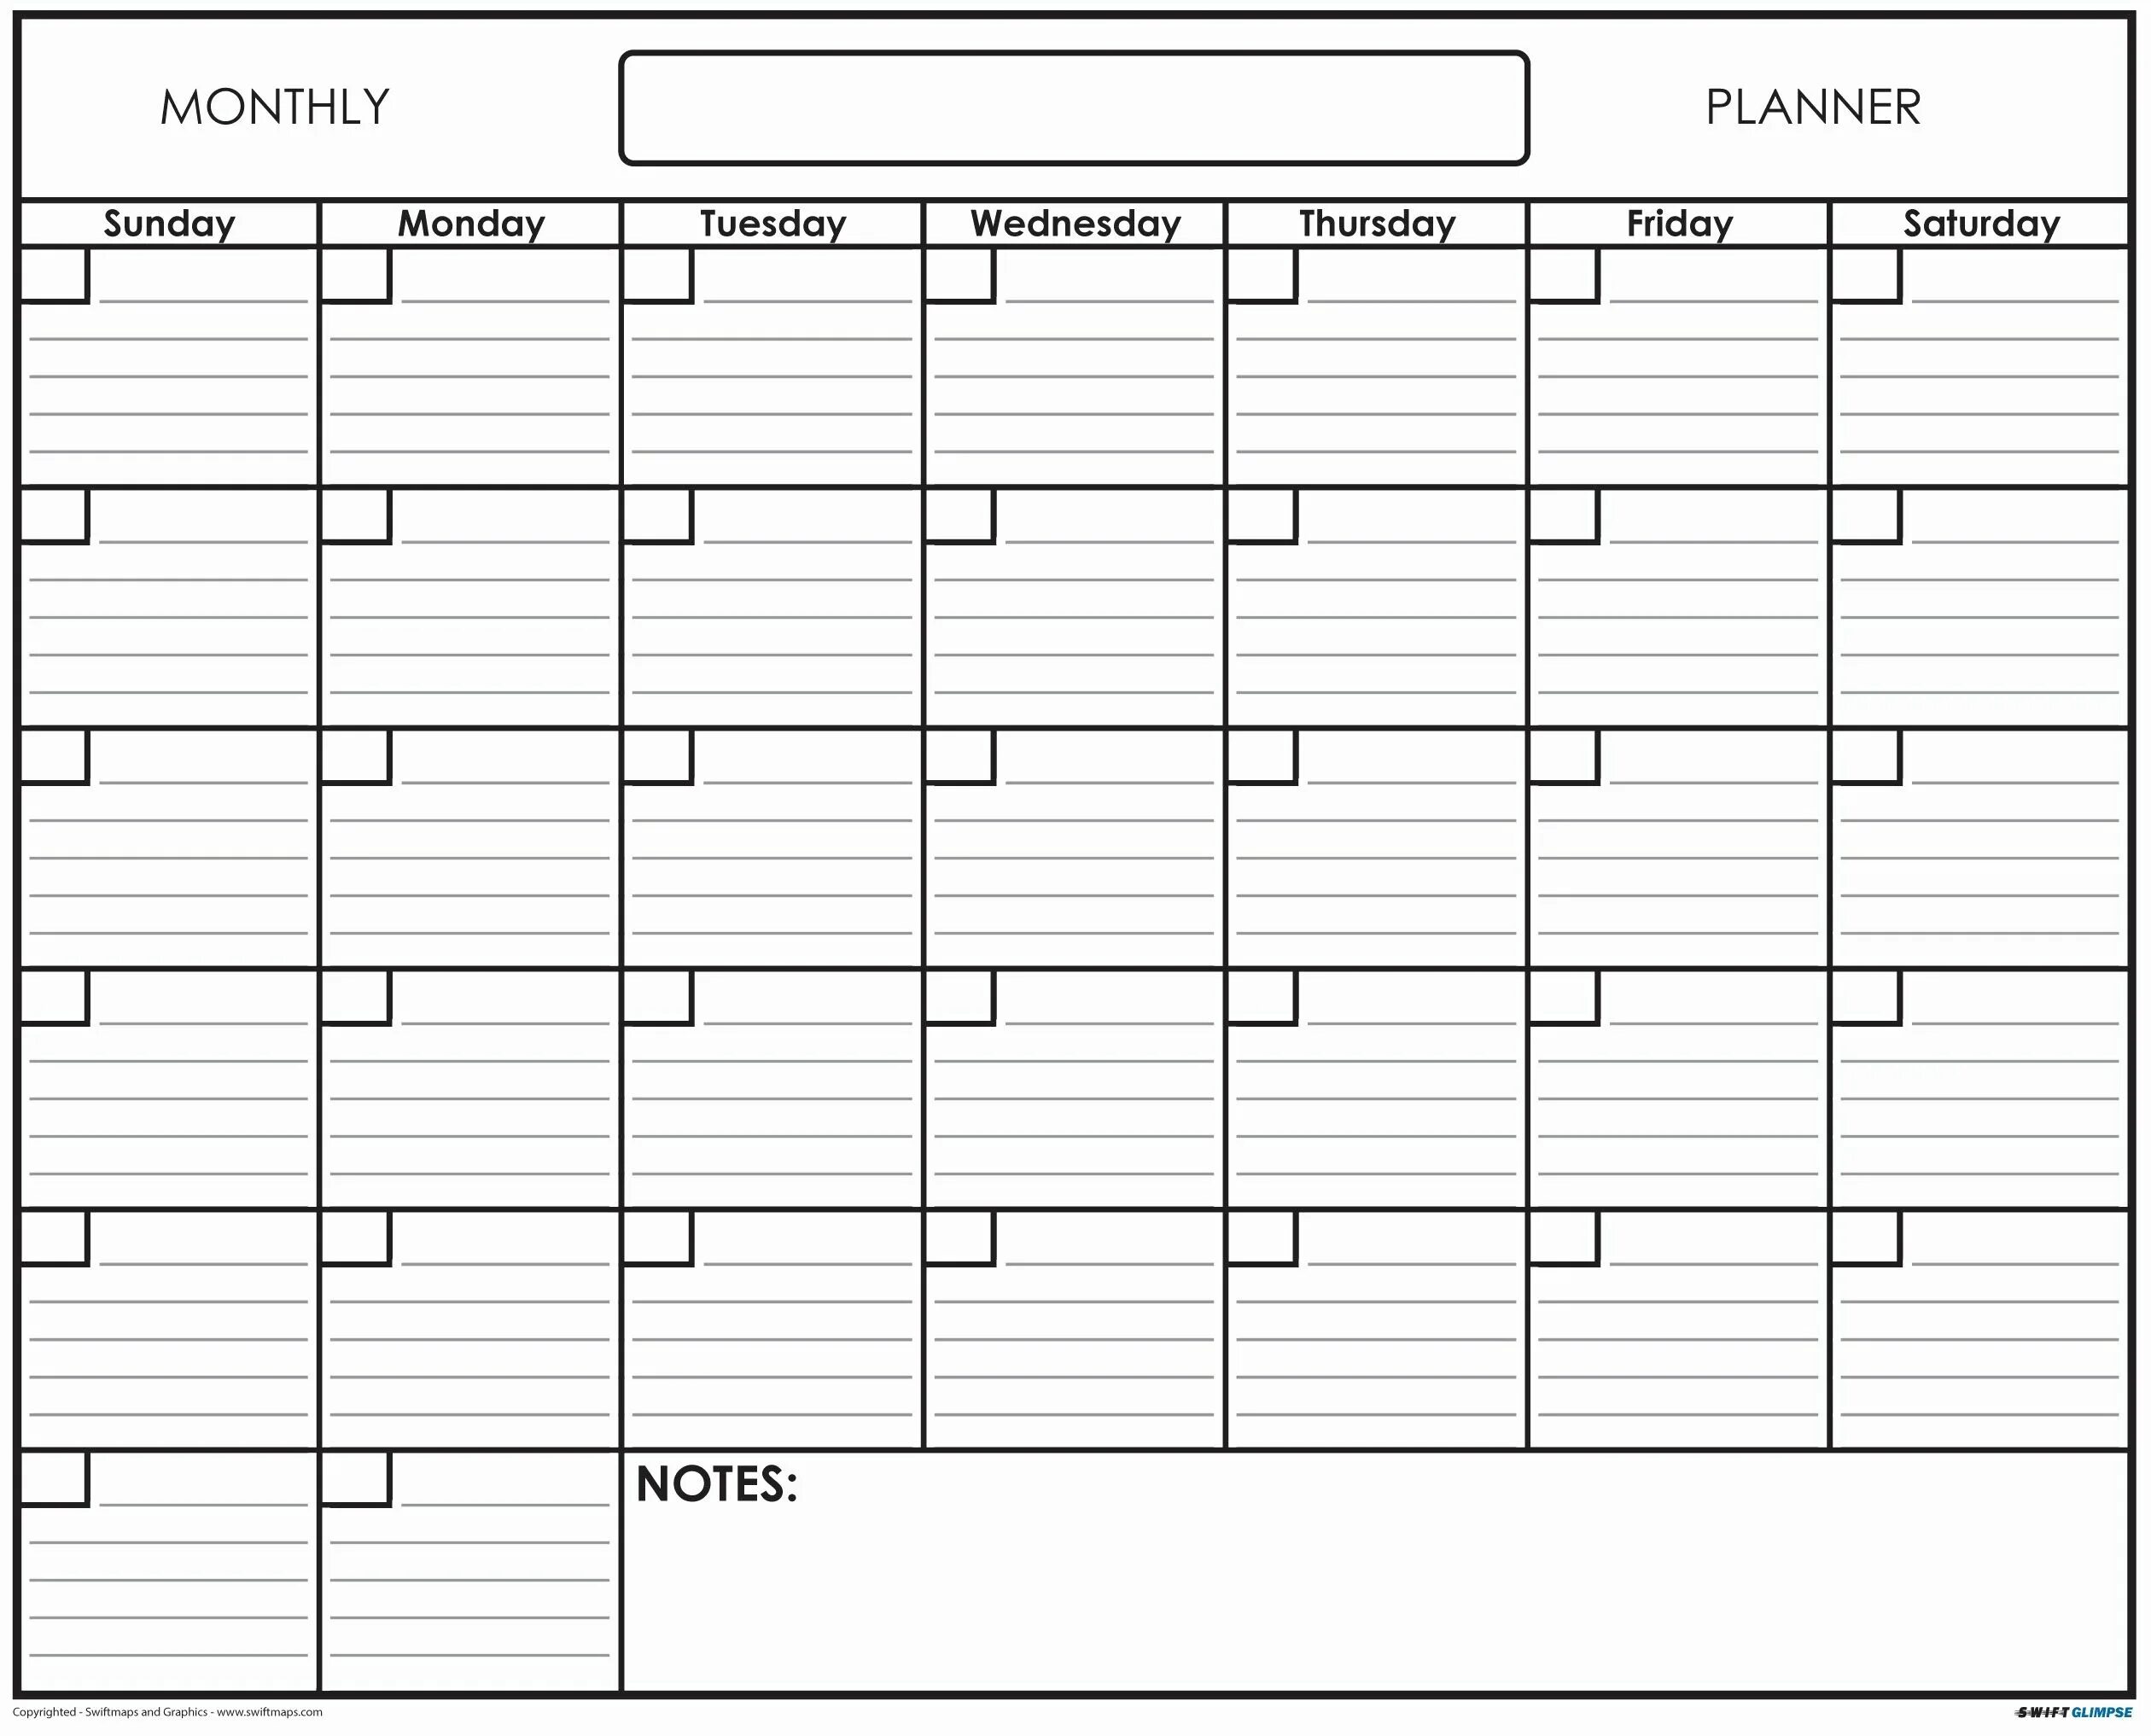 План календарь ма й я. Планировщик на месяц. Календарь план. Планинг на месяц. Планирование на месяц.